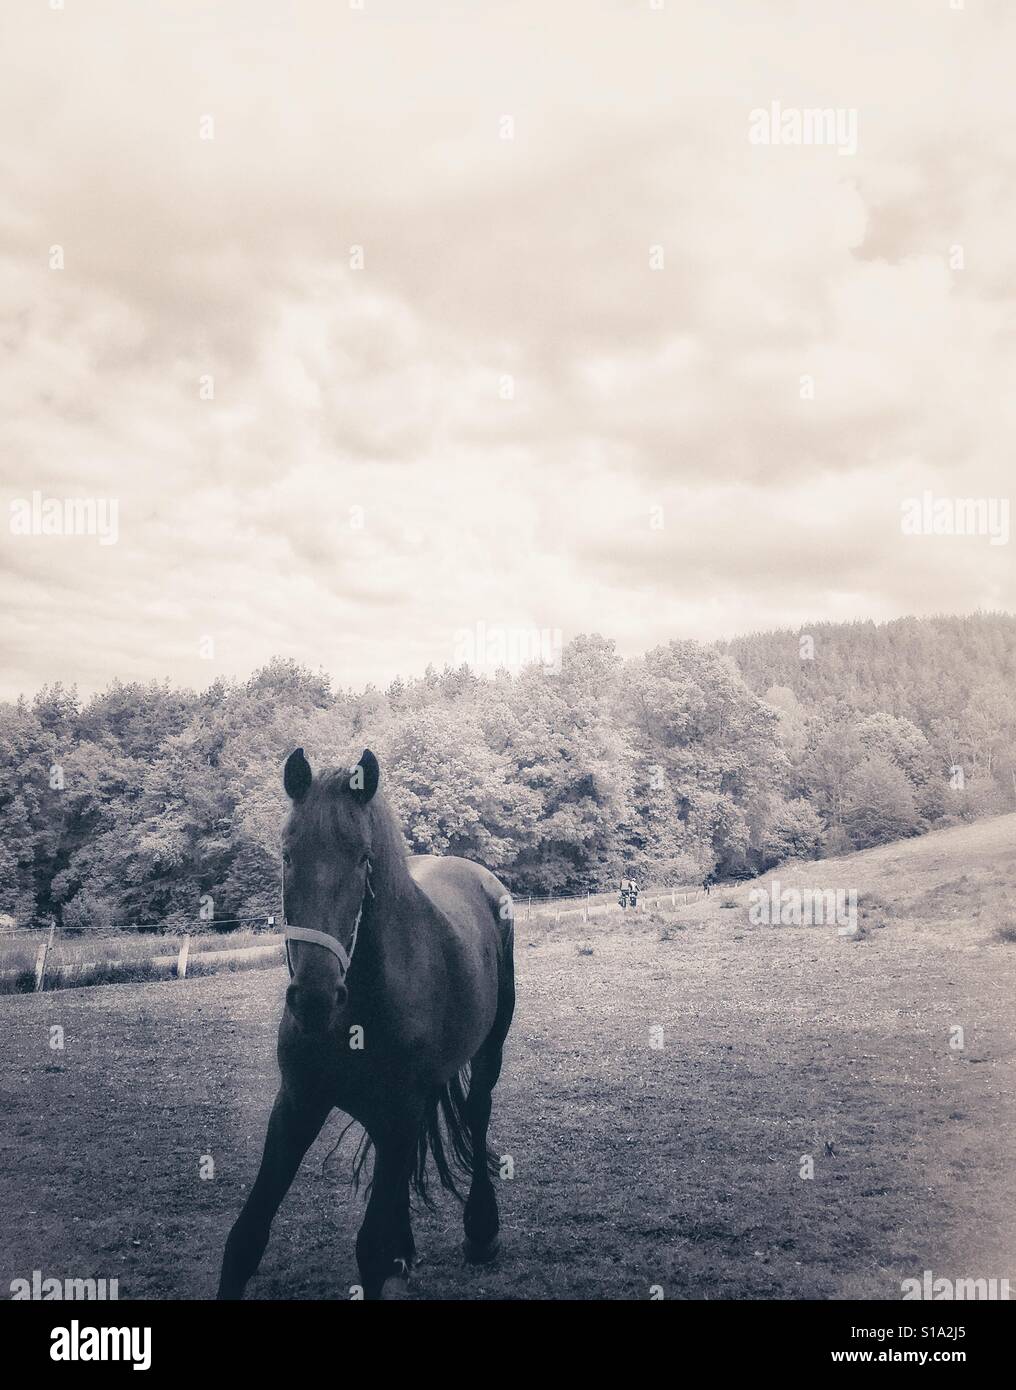 Pferd im Feld Stockfoto